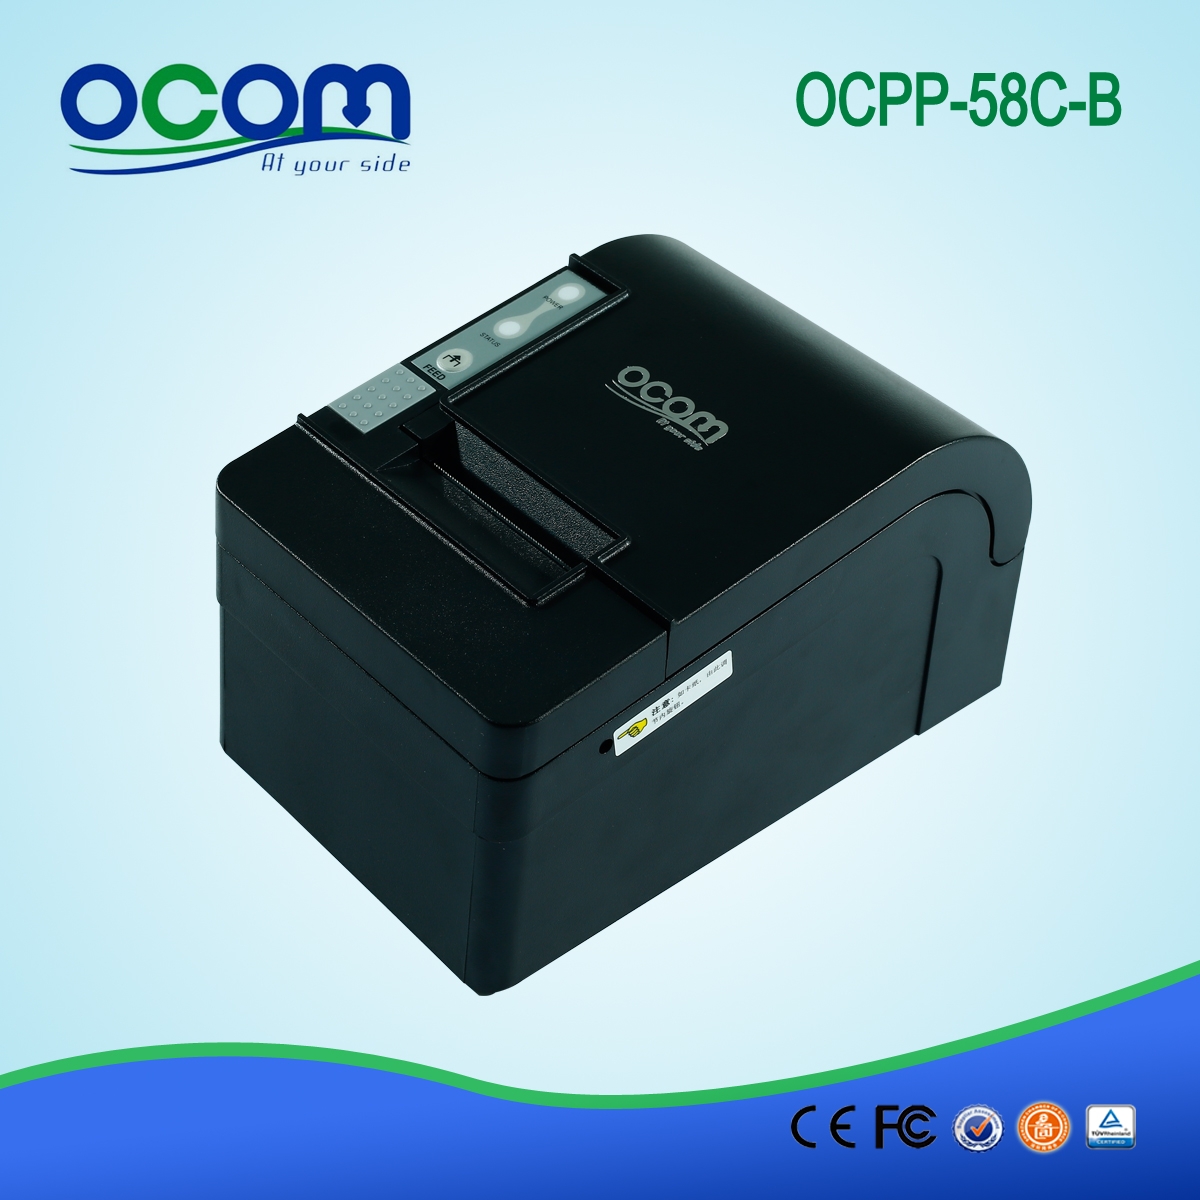 58mm Thermal Receipt Printer Auto Cutter OCPP-58C-R RS232 Port